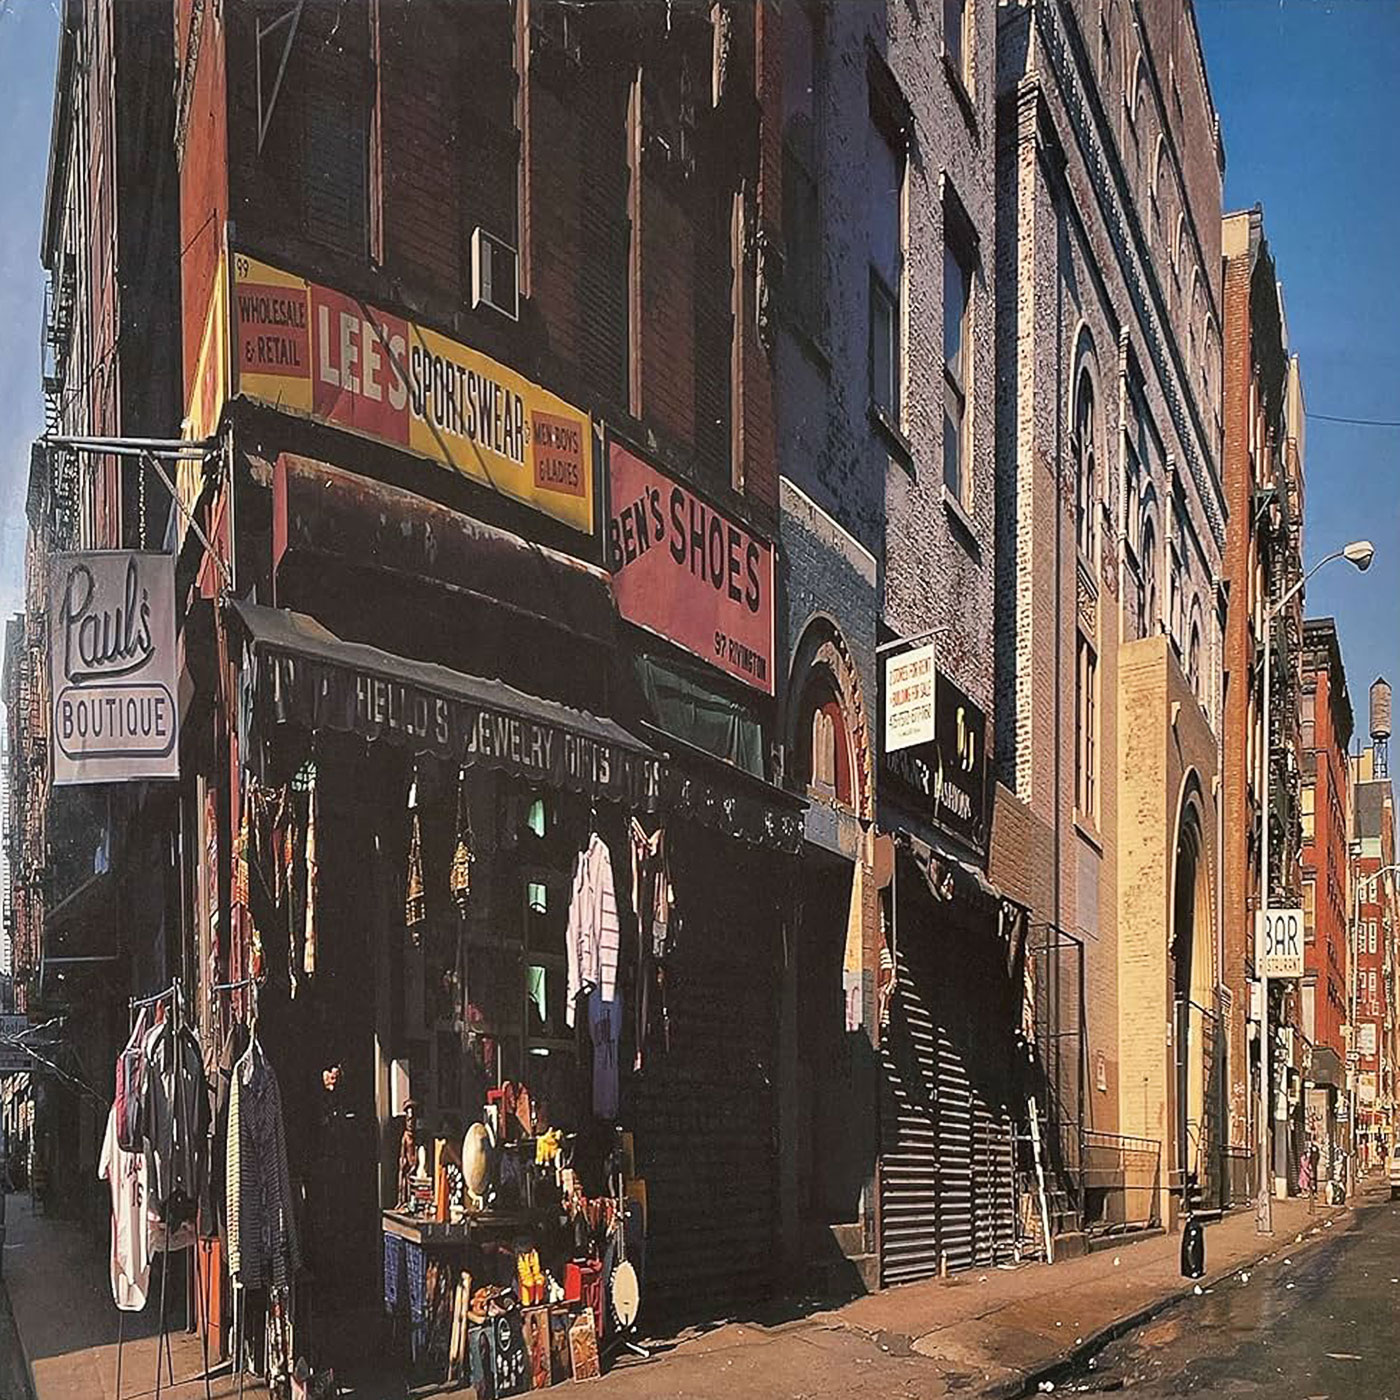 644 The Beastie Boys – Paul’s Boutique